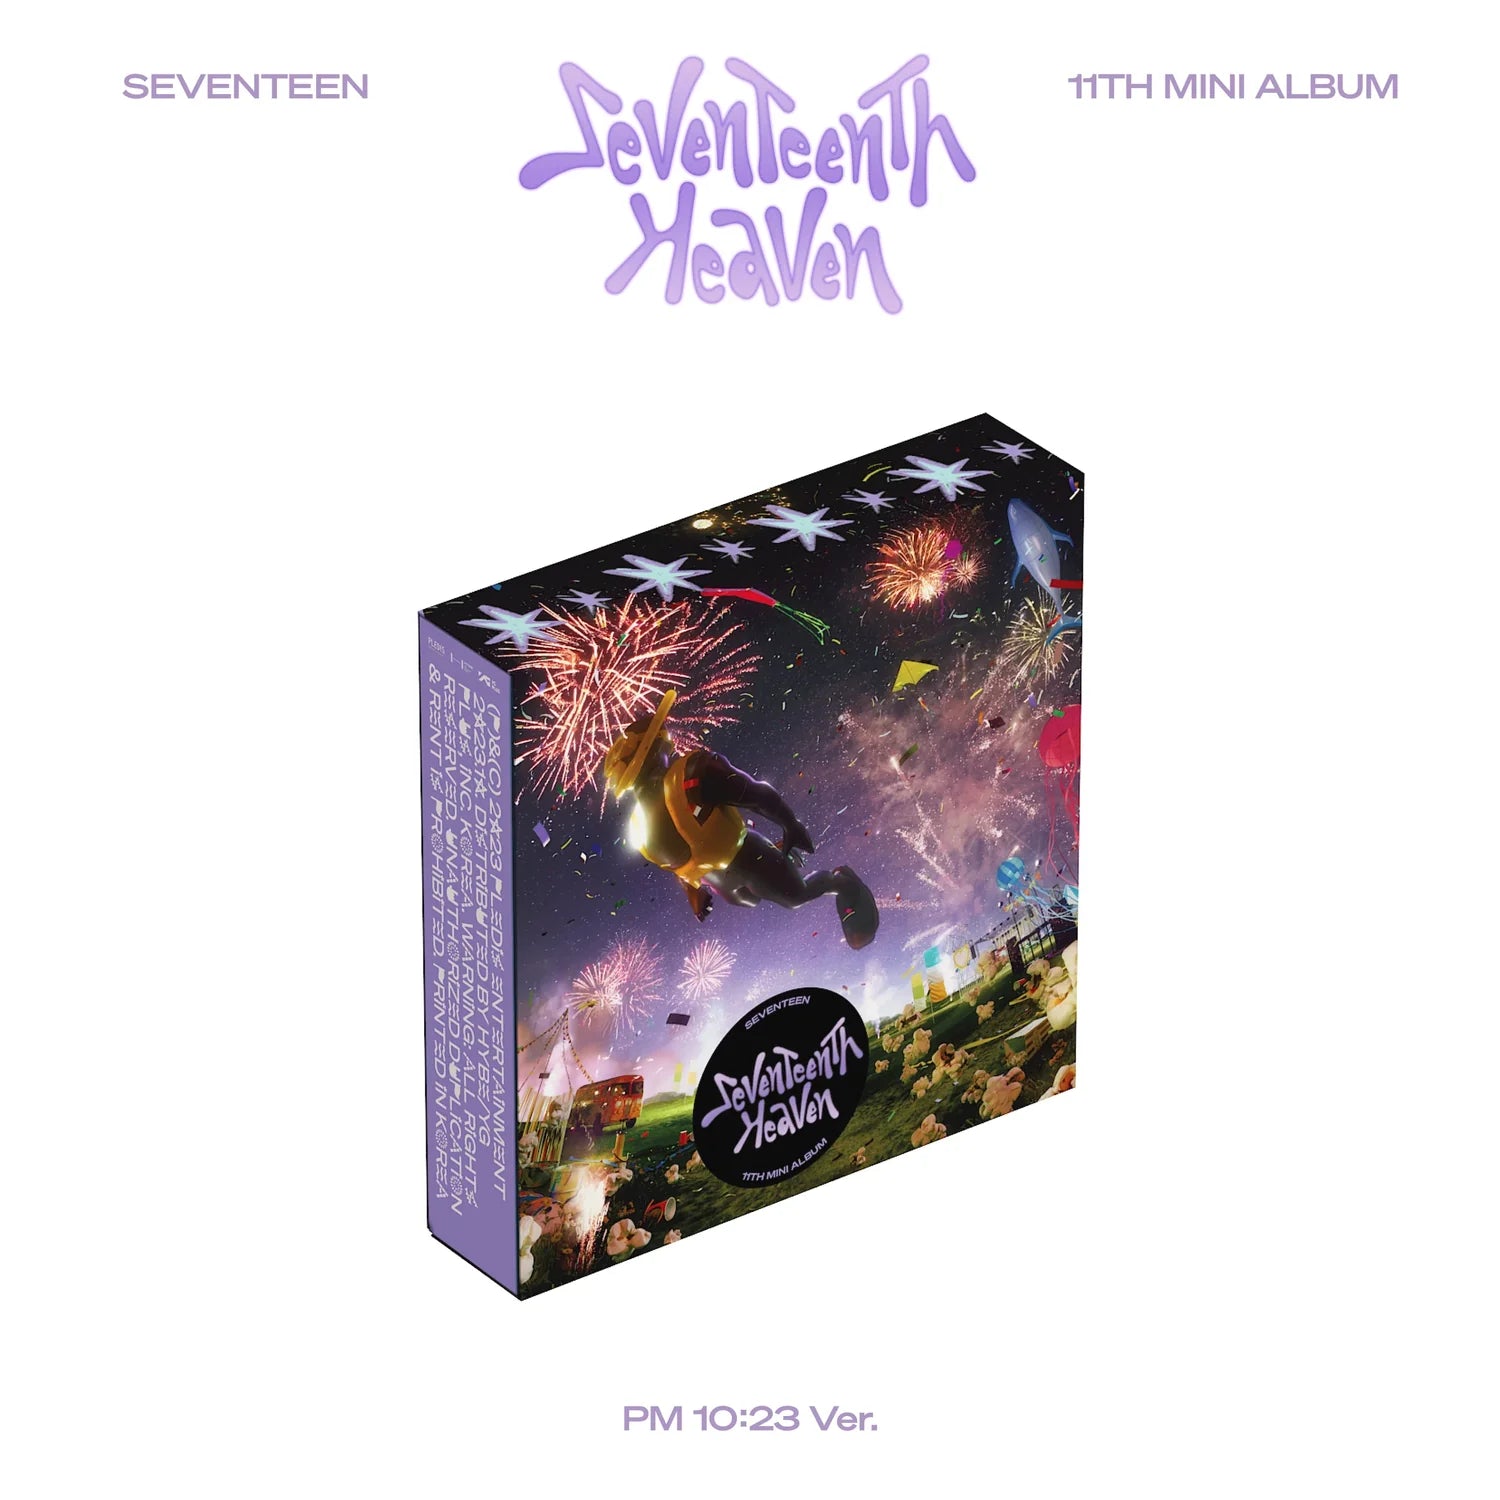 SEVENTEEN 11th Mini Album SEVENTEENTH HEAVEN